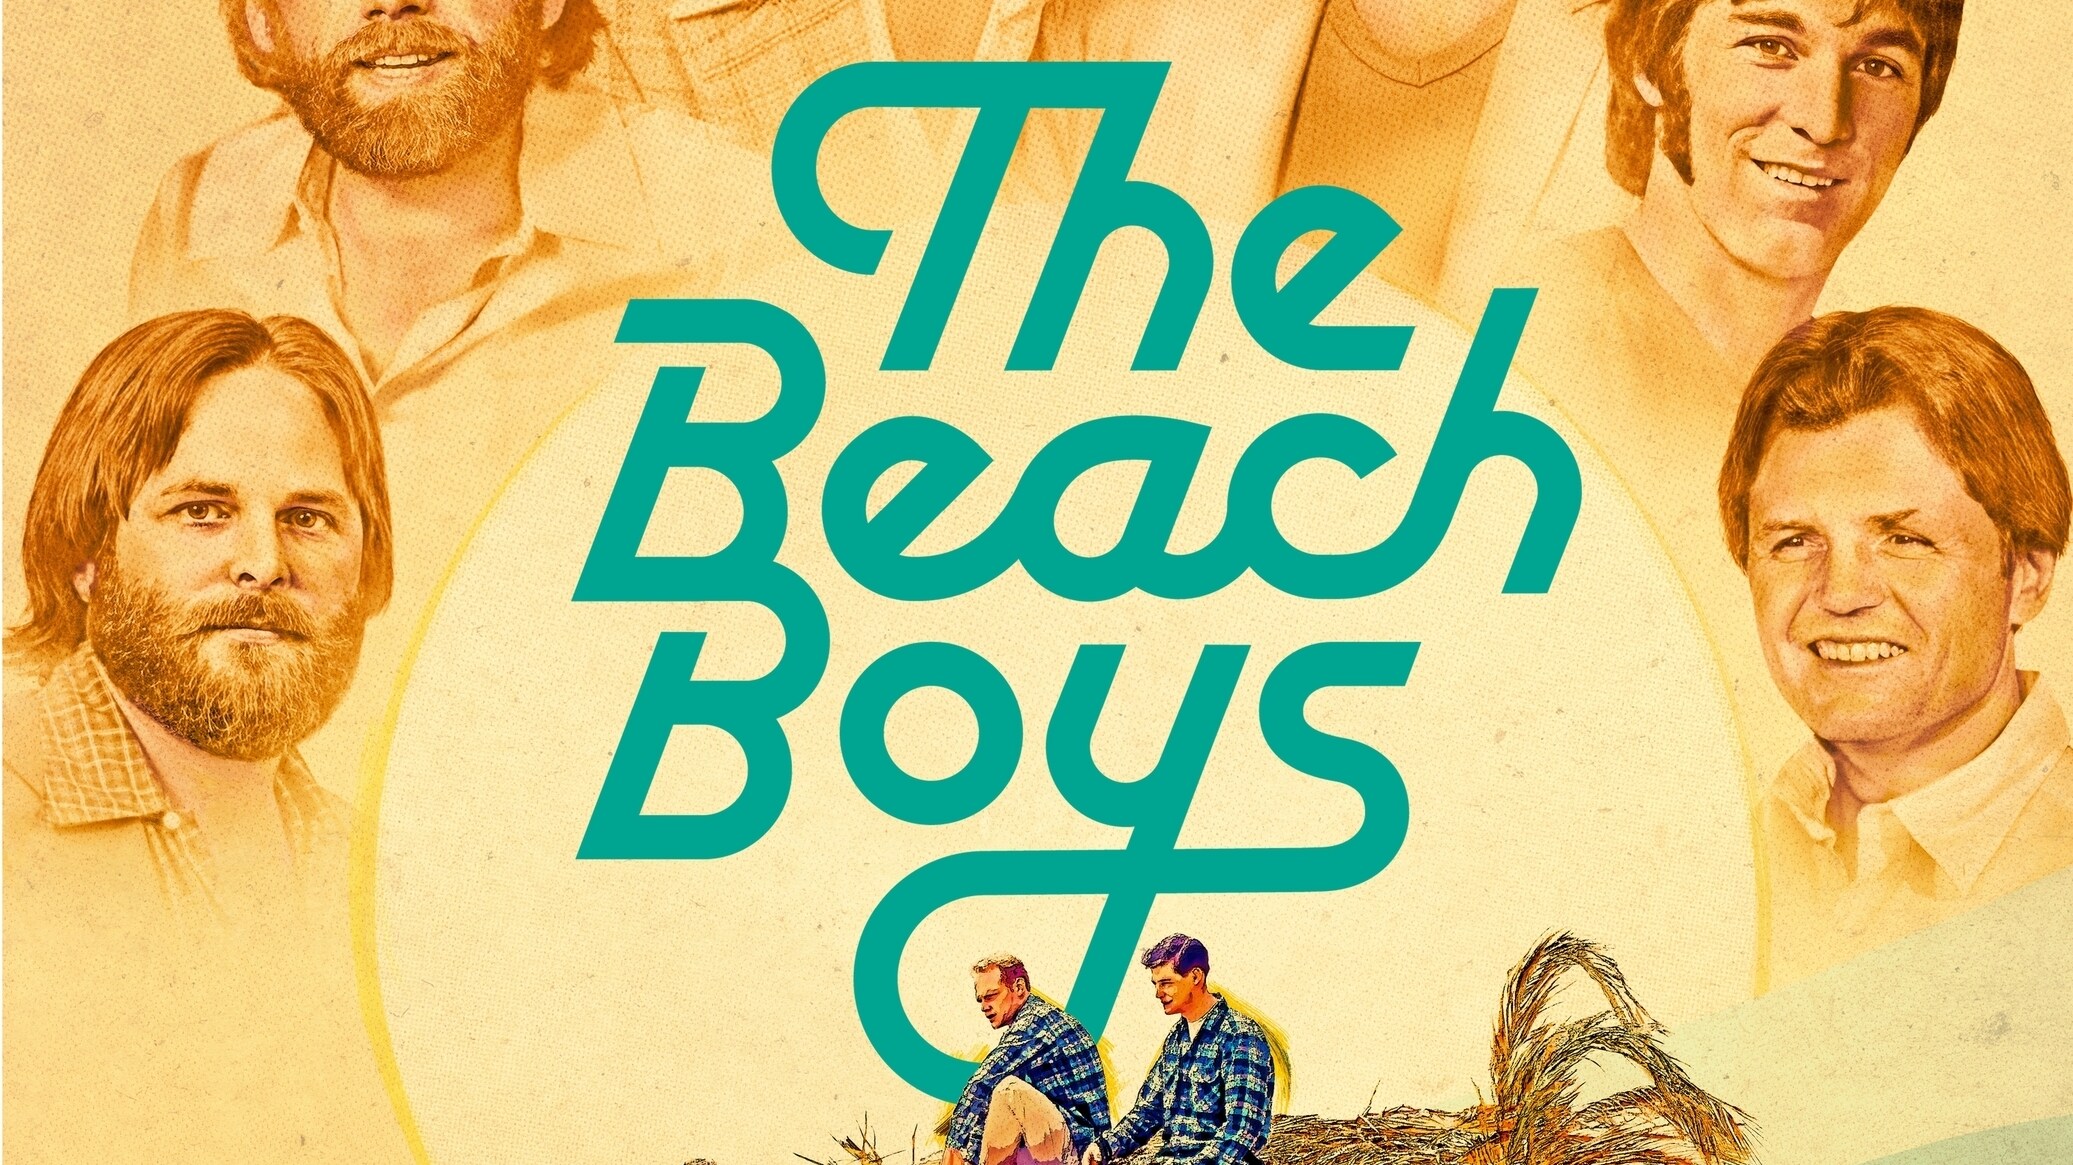 THE BEACH BOYS TRAILER AND KEY ART AVAILABLE NOW All-New Documentary Film Streams on Disney+ May 24